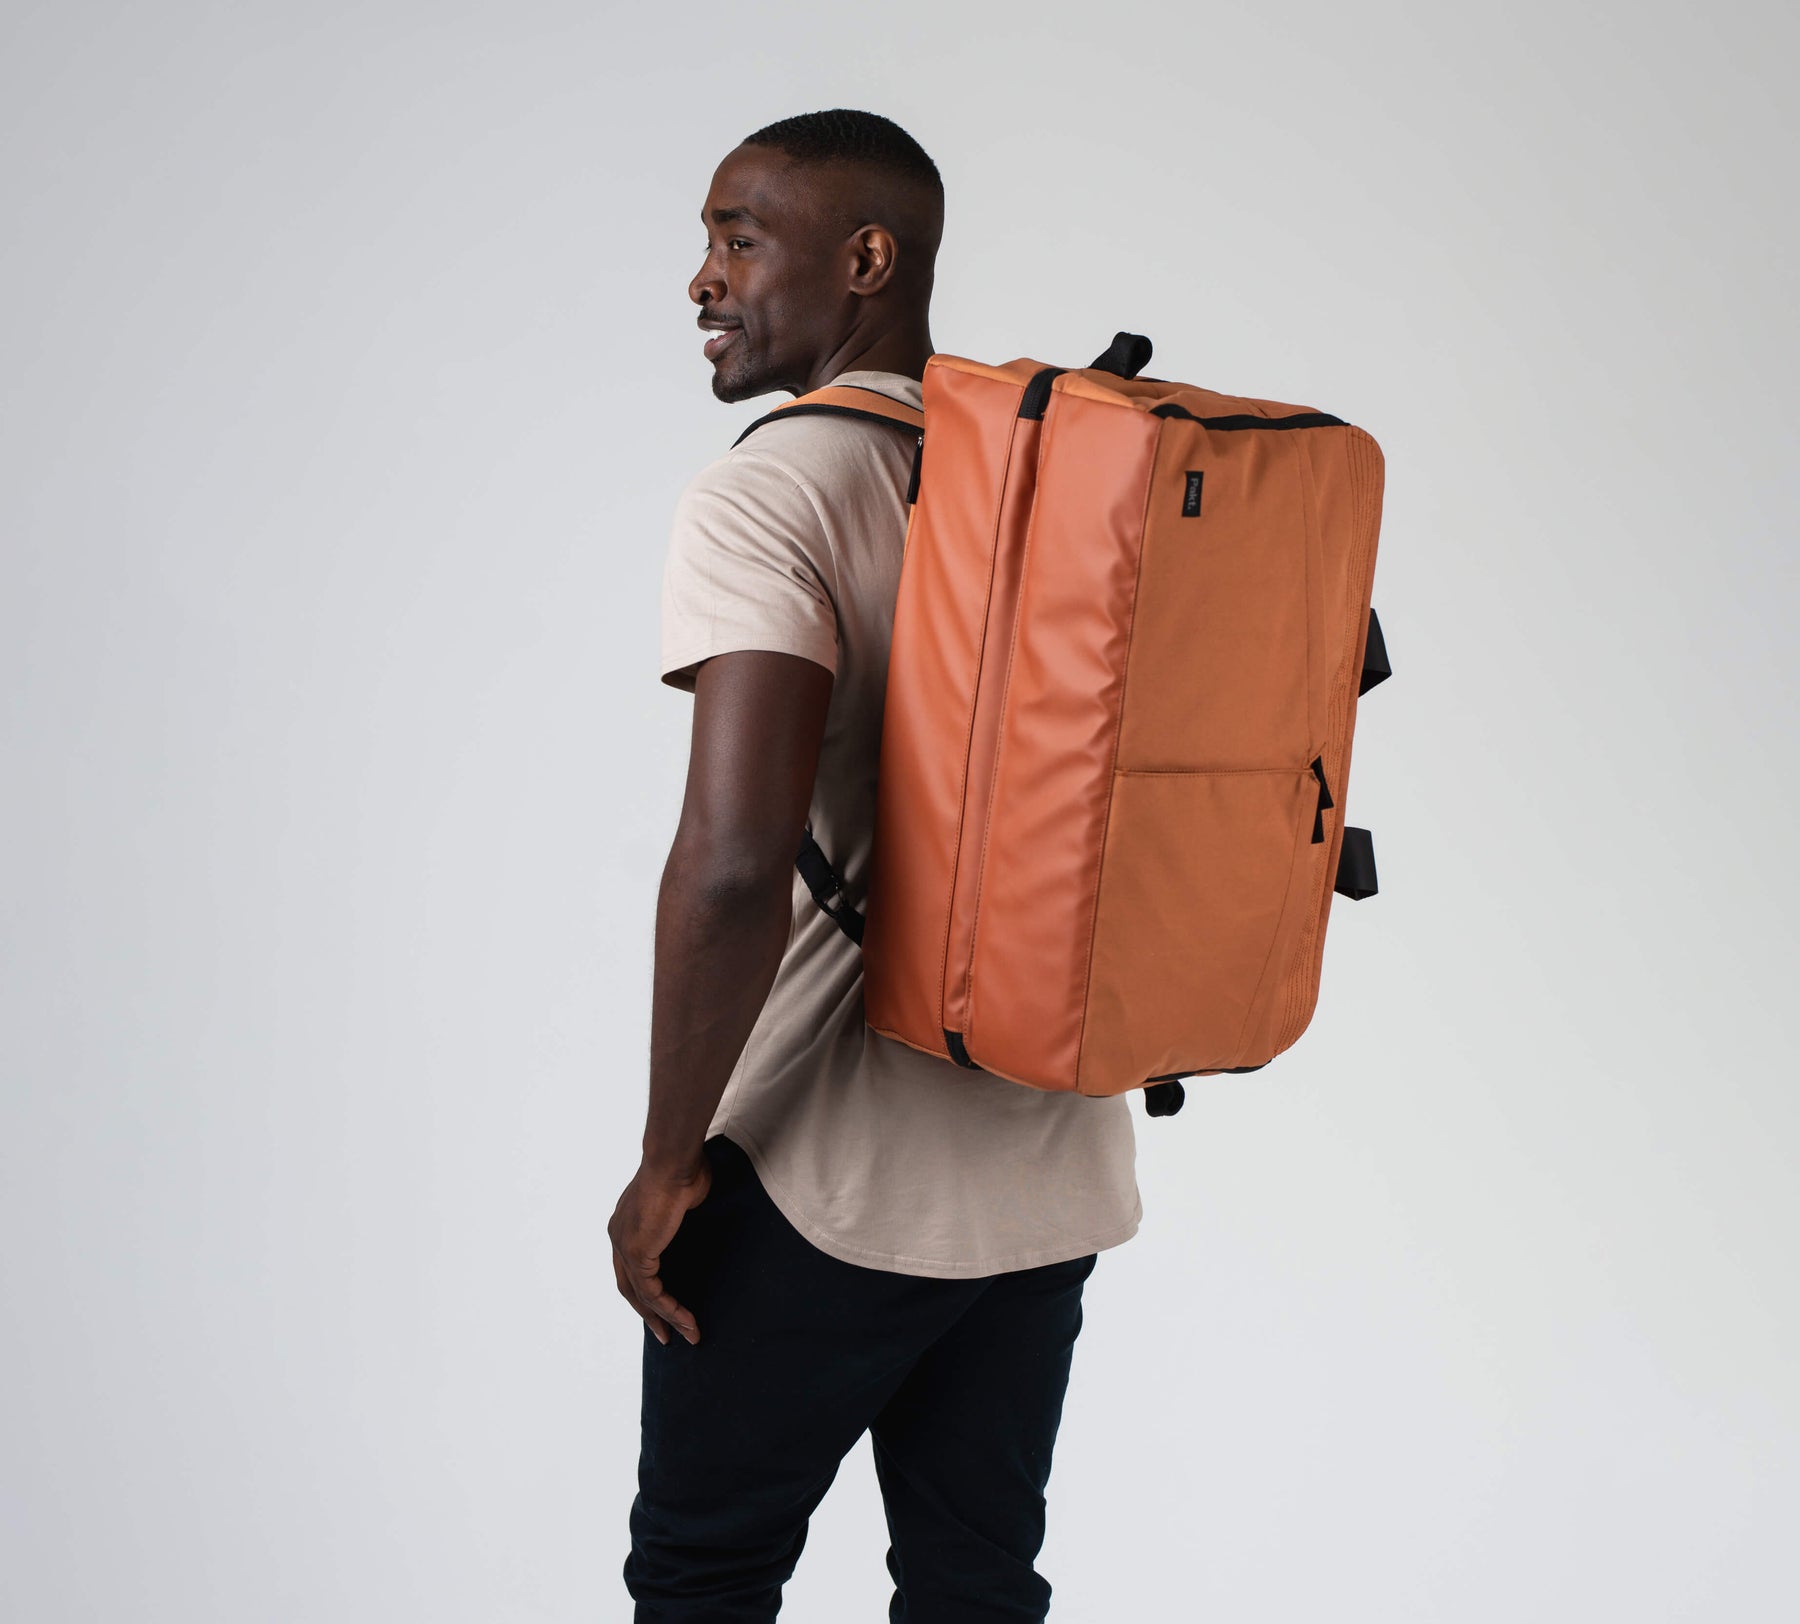 19 Best Gym Bags for Men: Duffles, Backpacks, & More